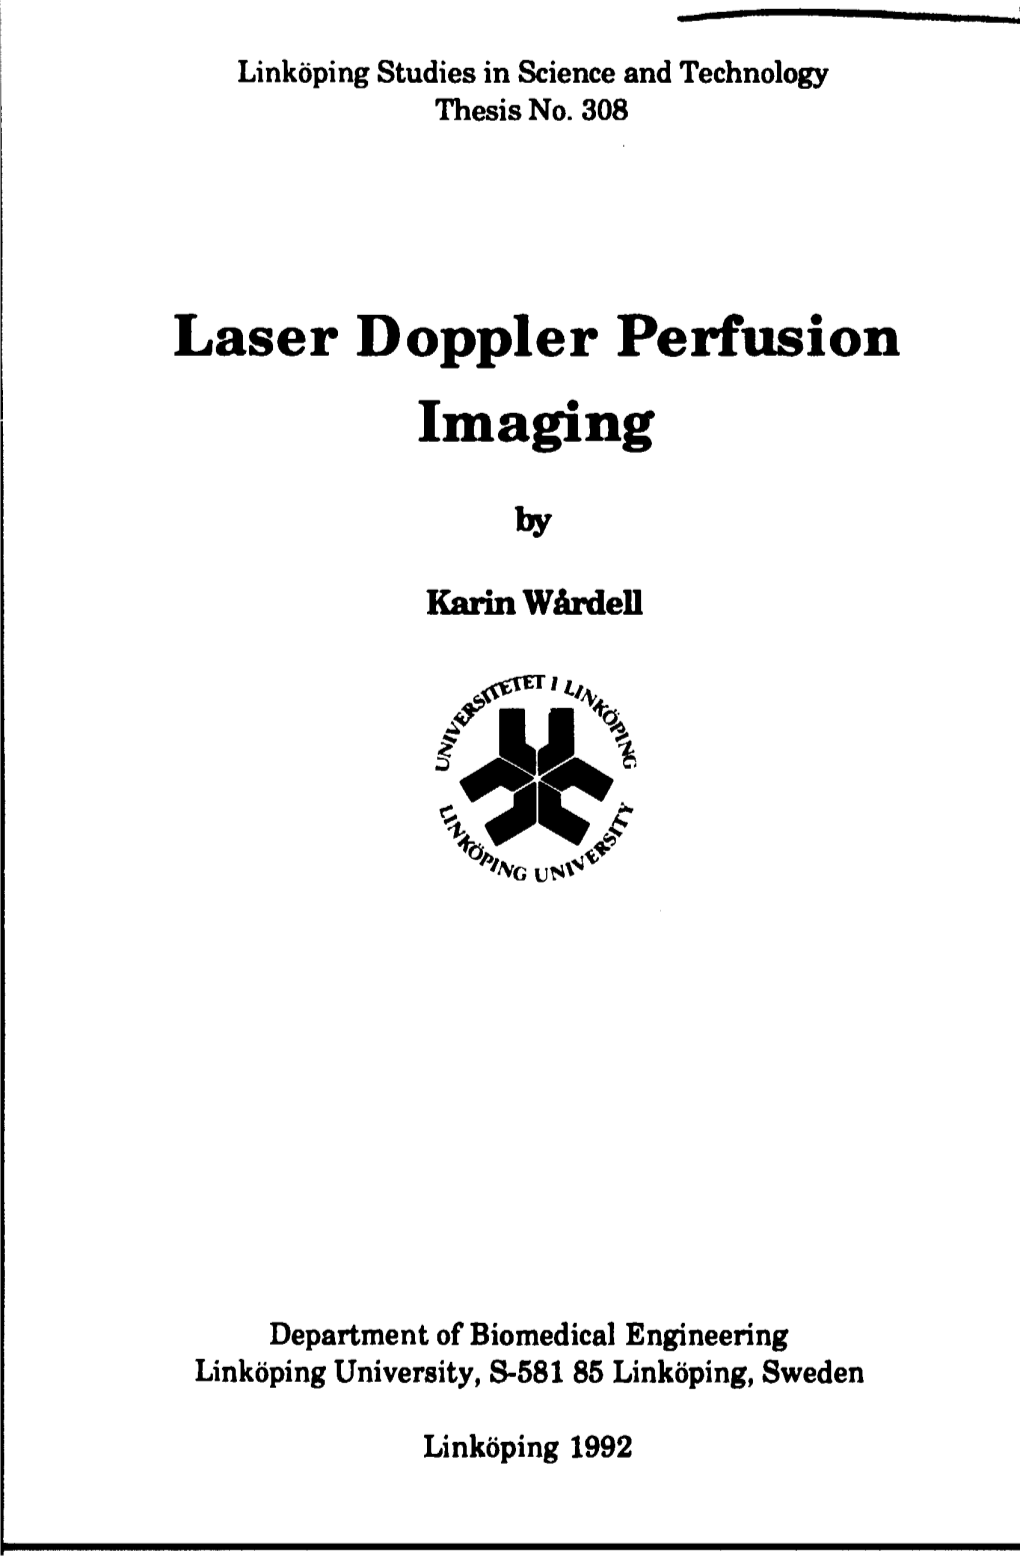 Laser Doppler Perfusion Imaging